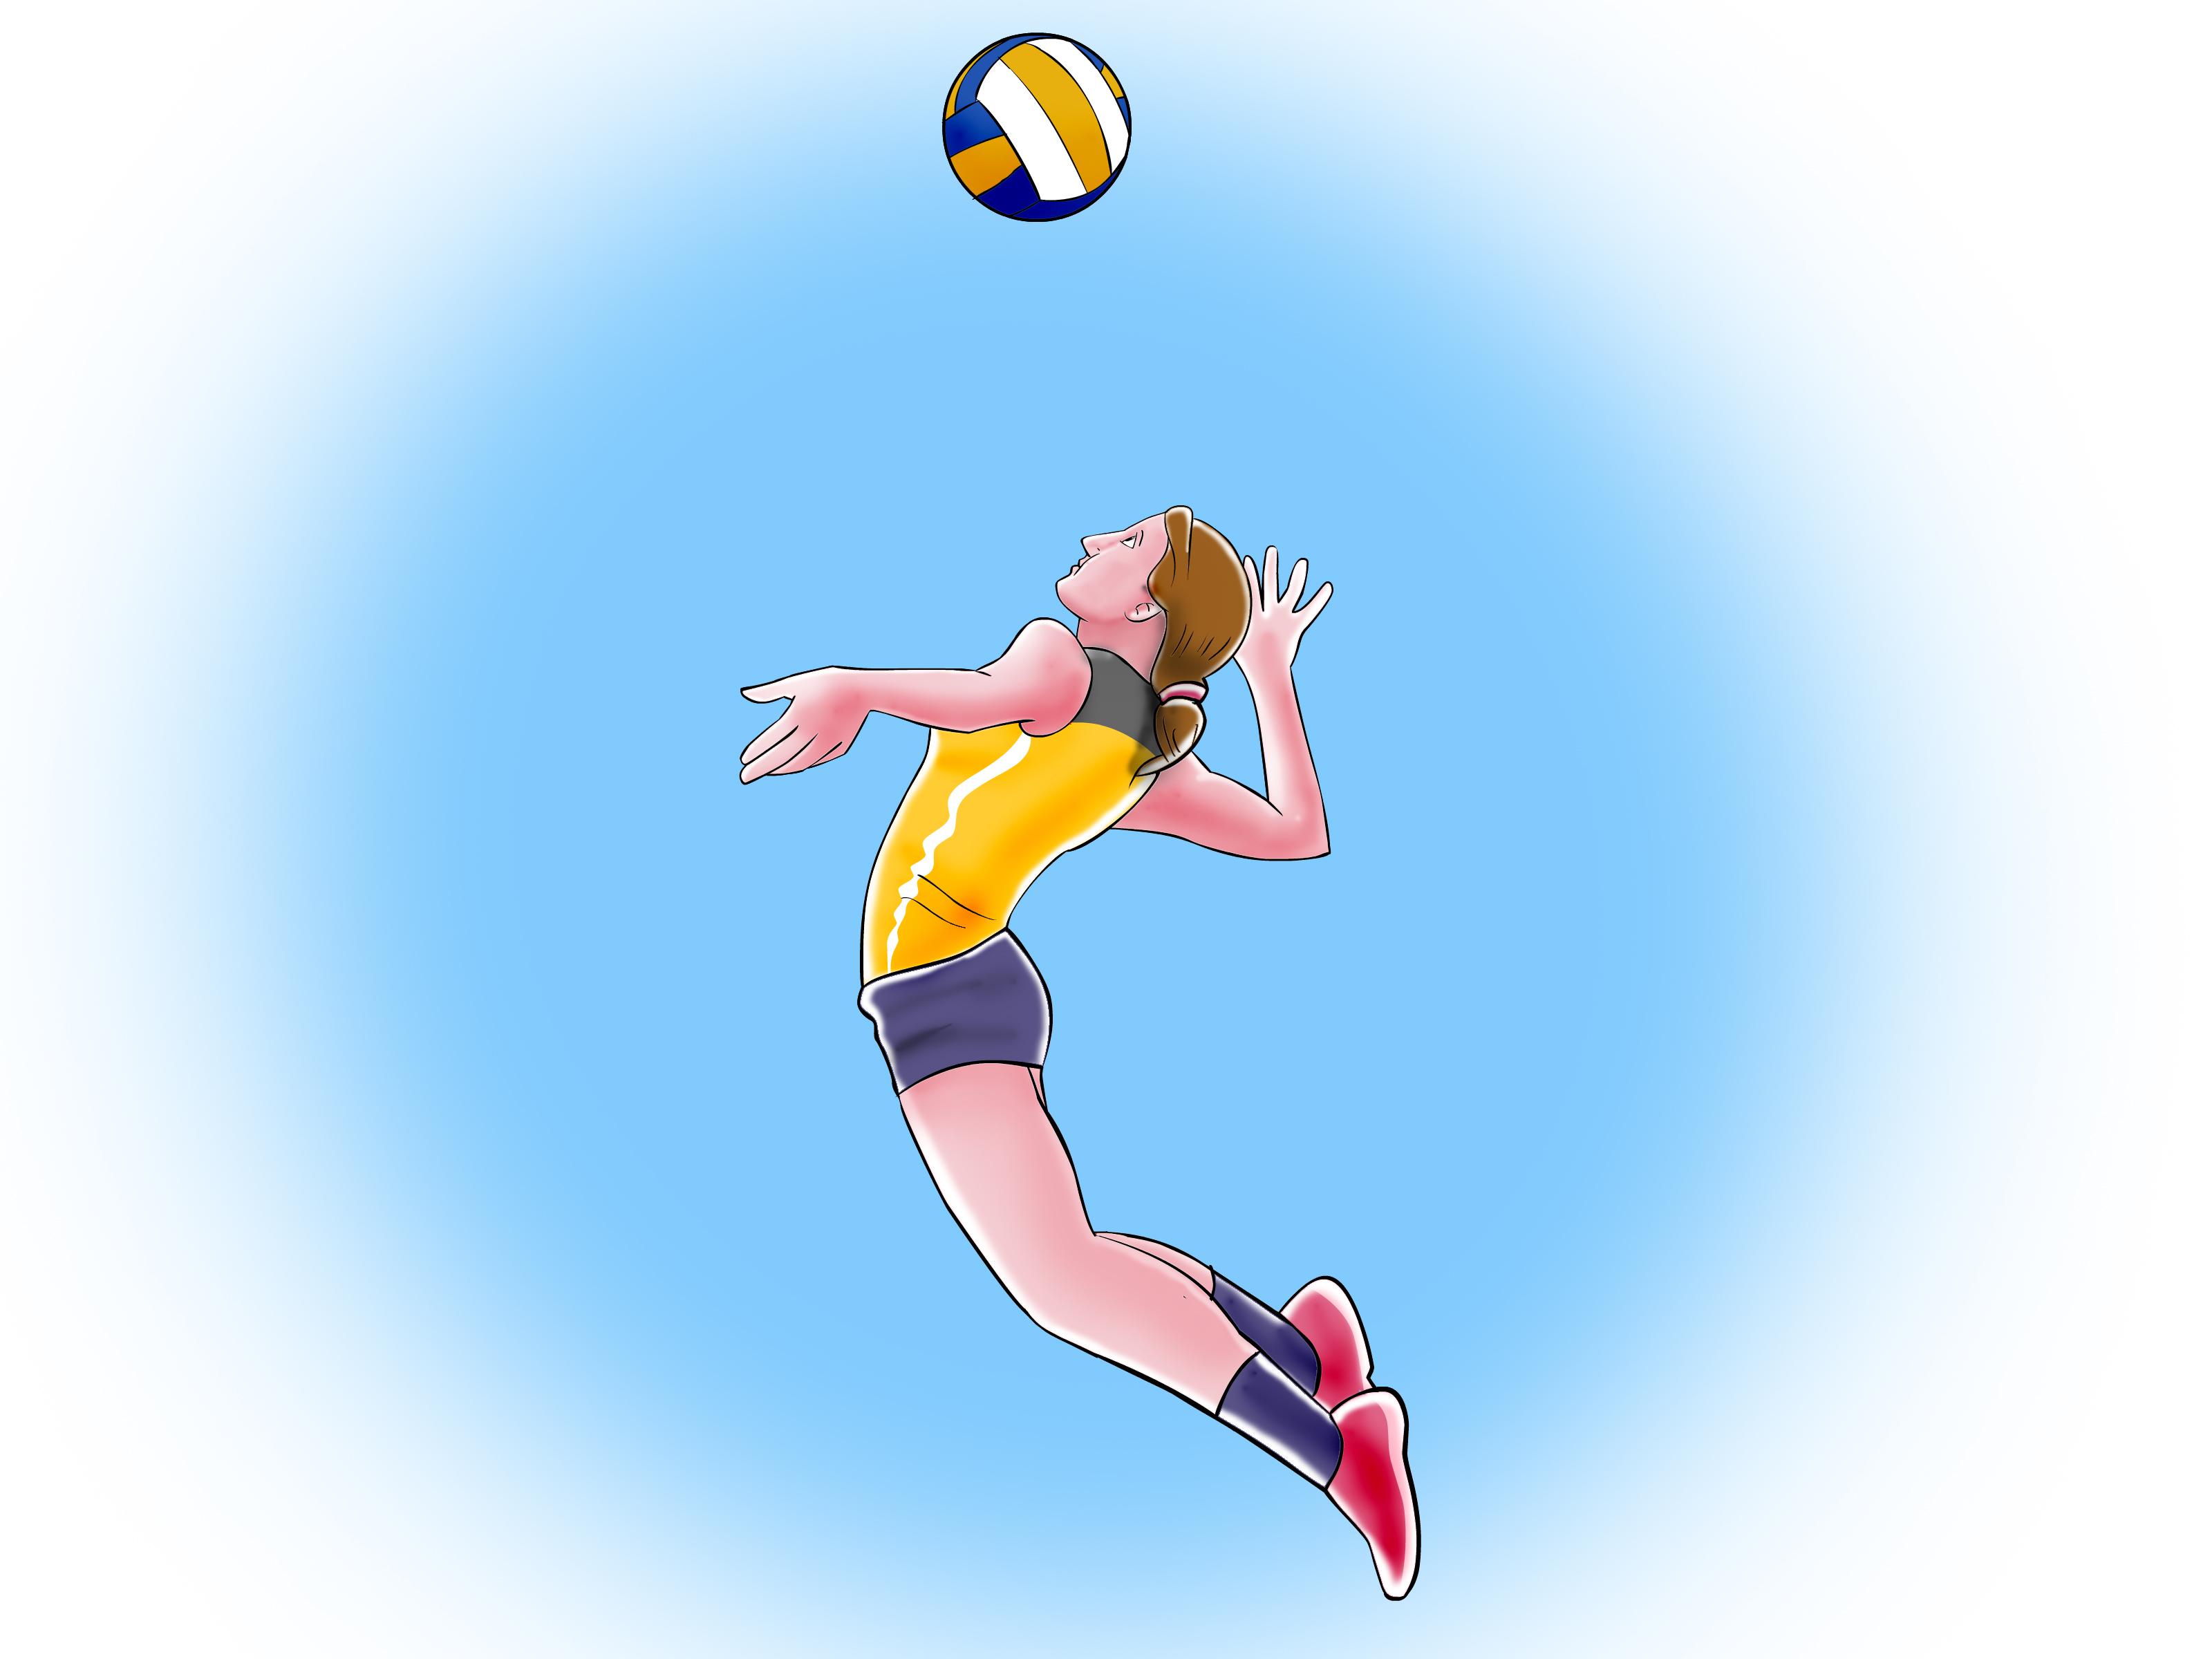 5,669 Volleyball Wallpaper Images, Stock Photos & Vectors | Shutterstock